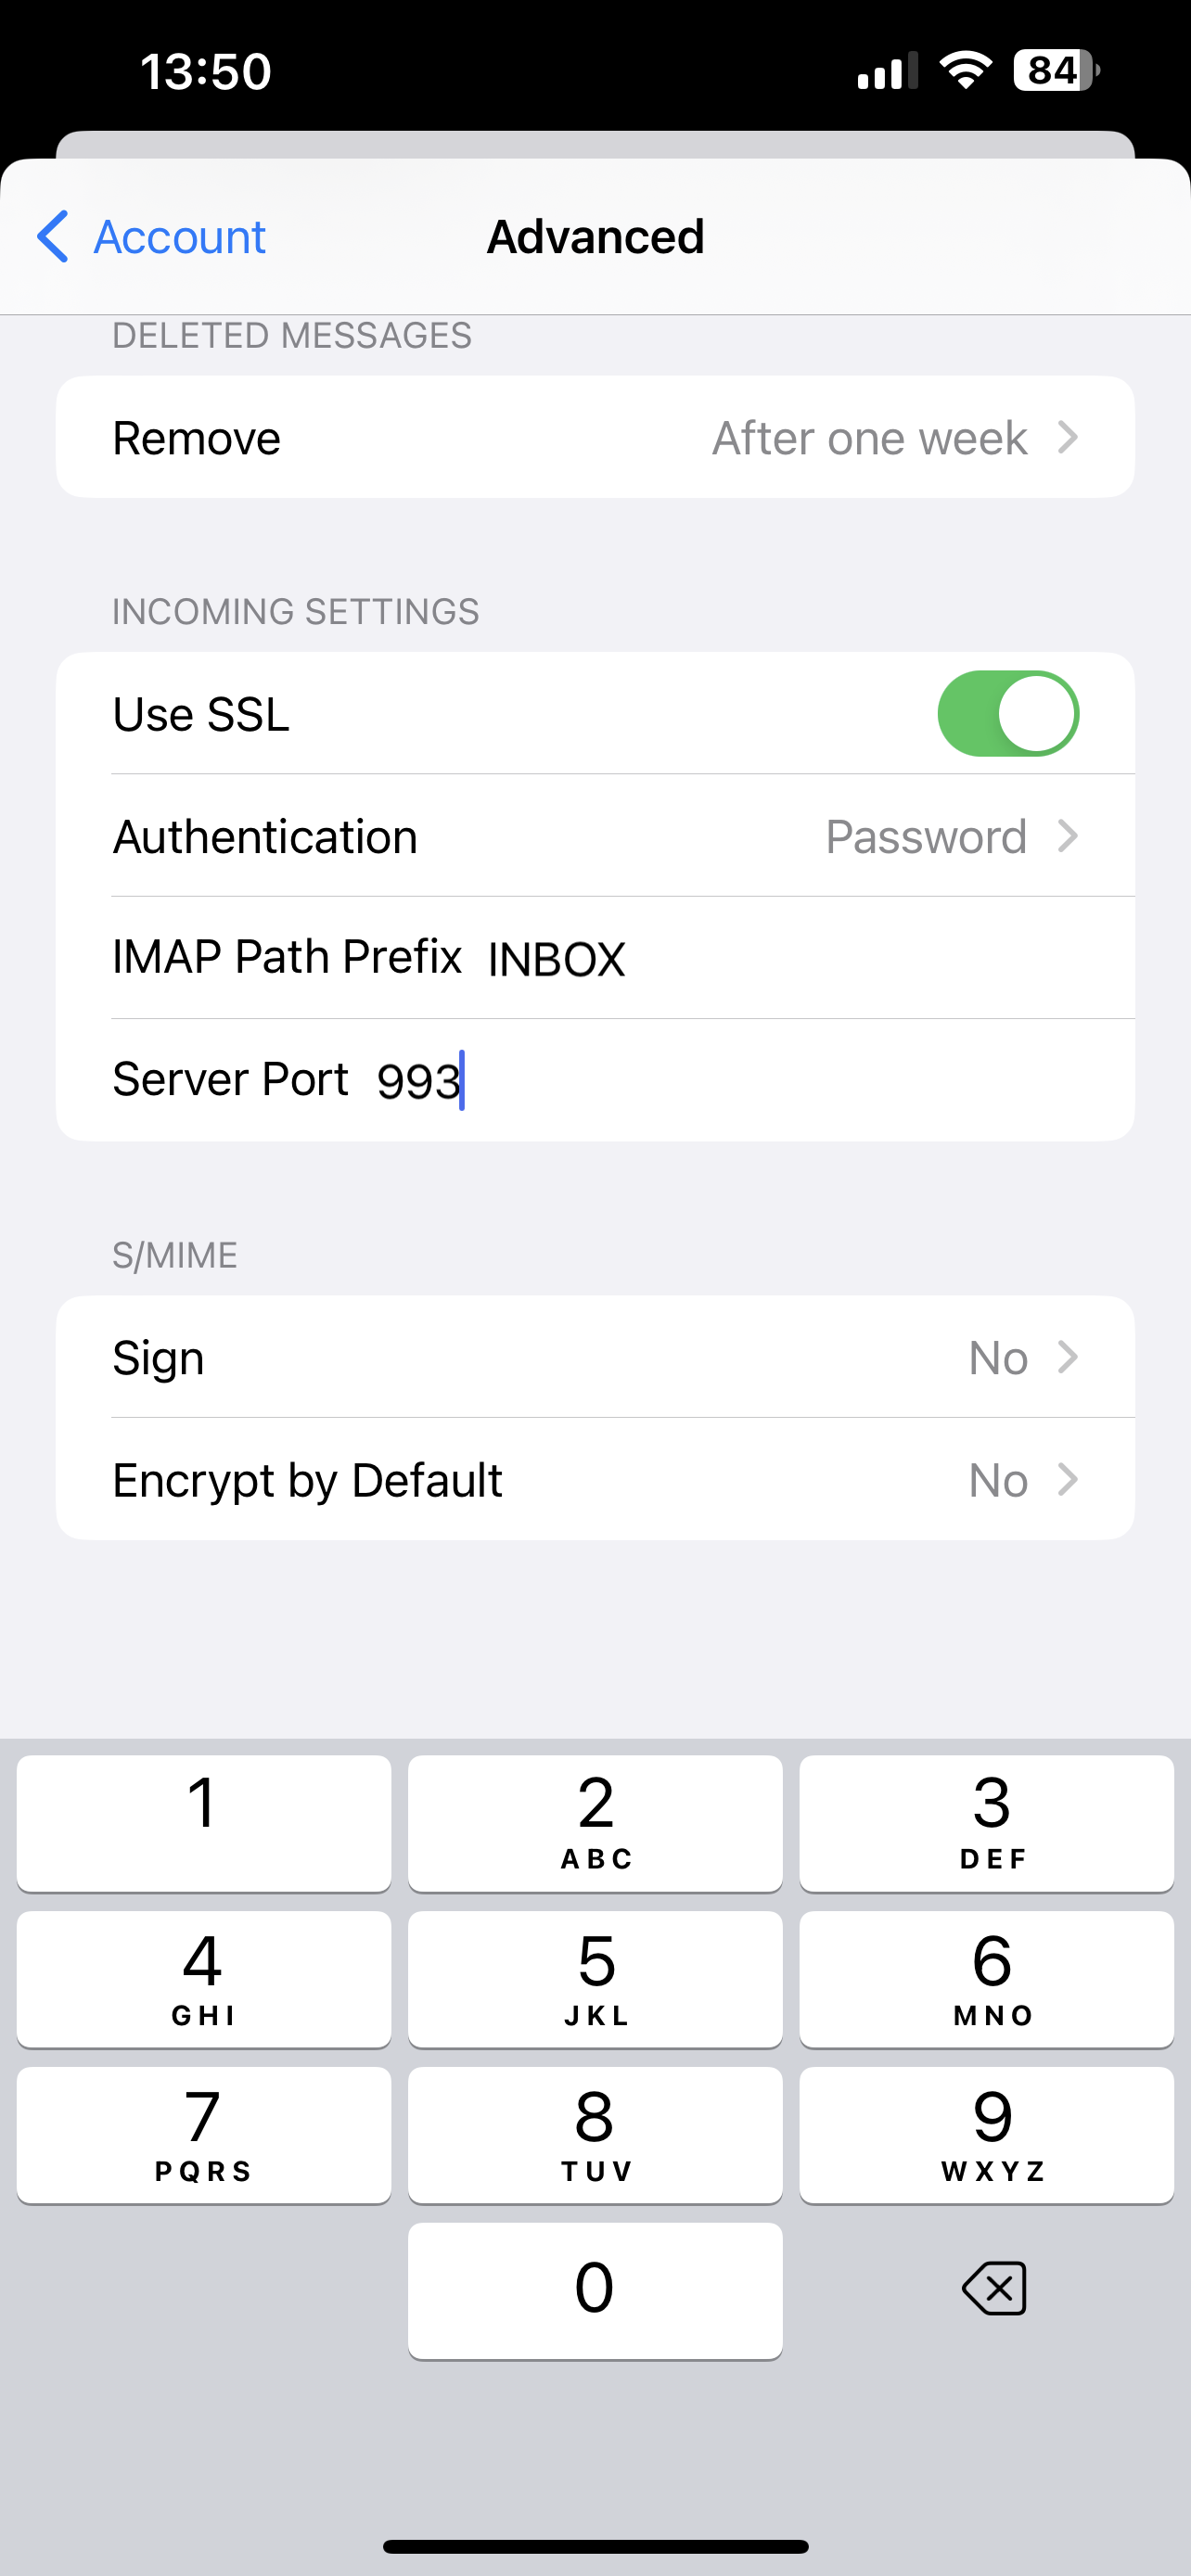 SSL and IMAP path prefix